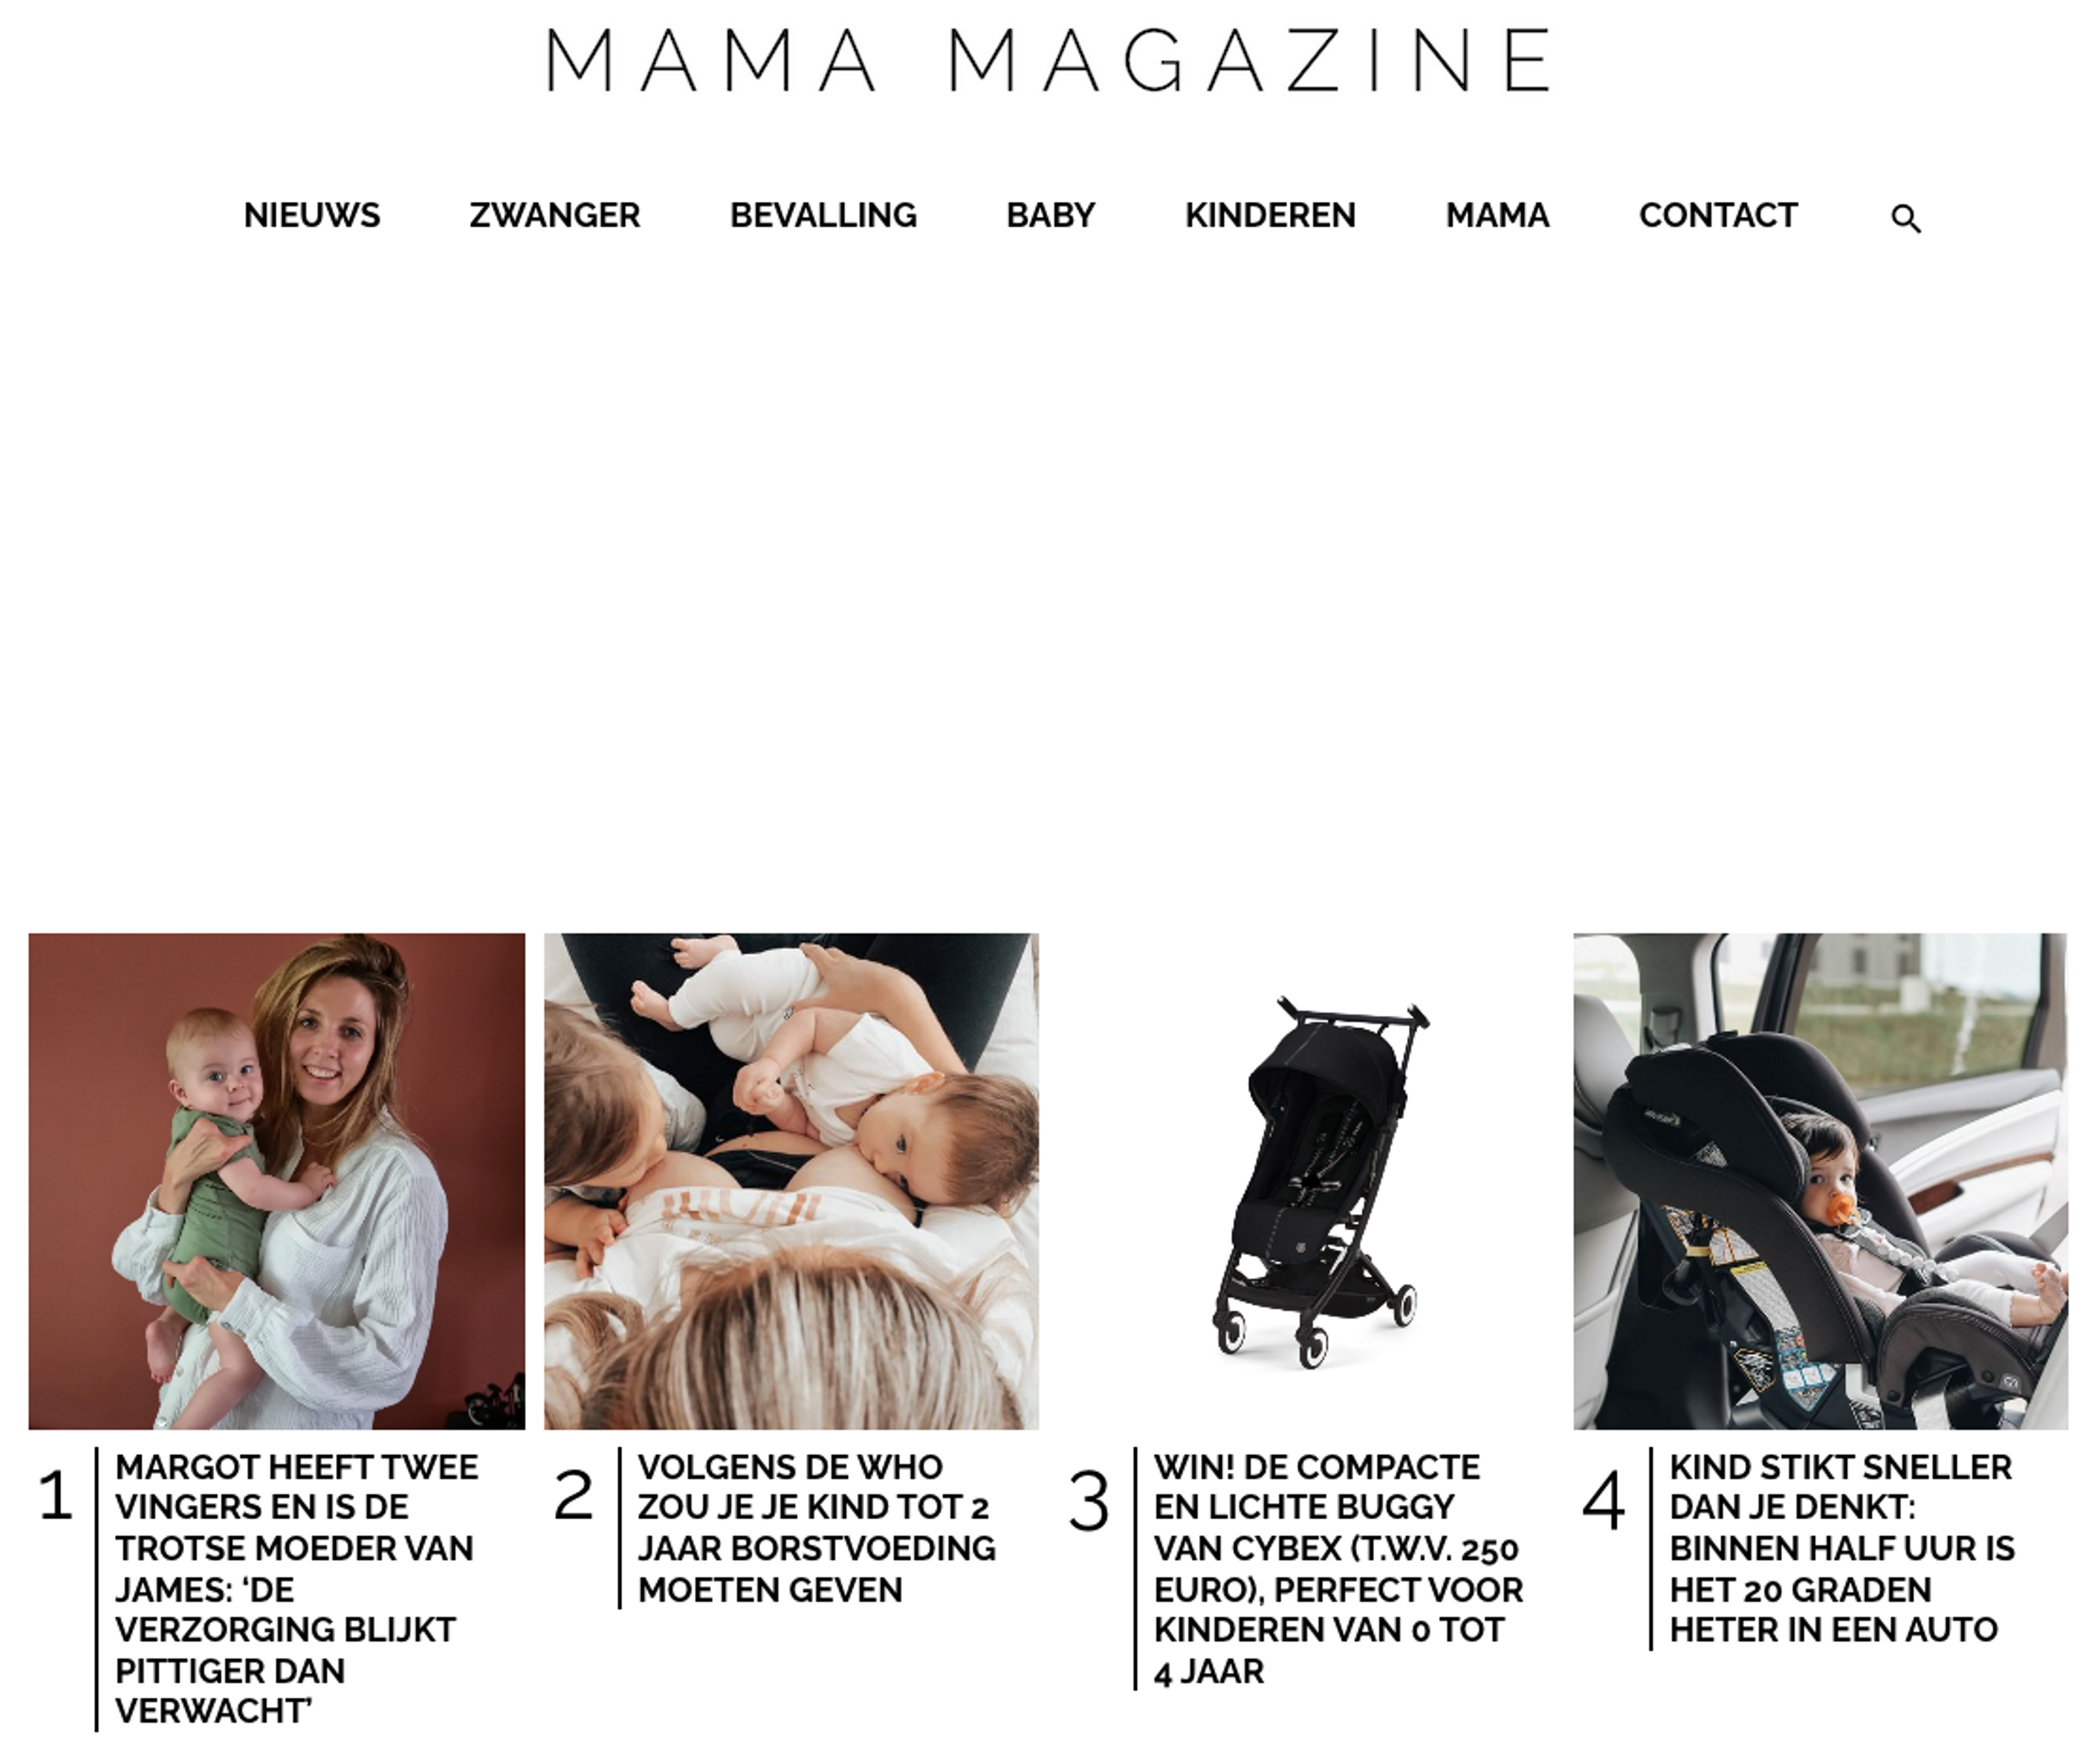 Mamamagazine.nl nieuwste parenting titel familyblend